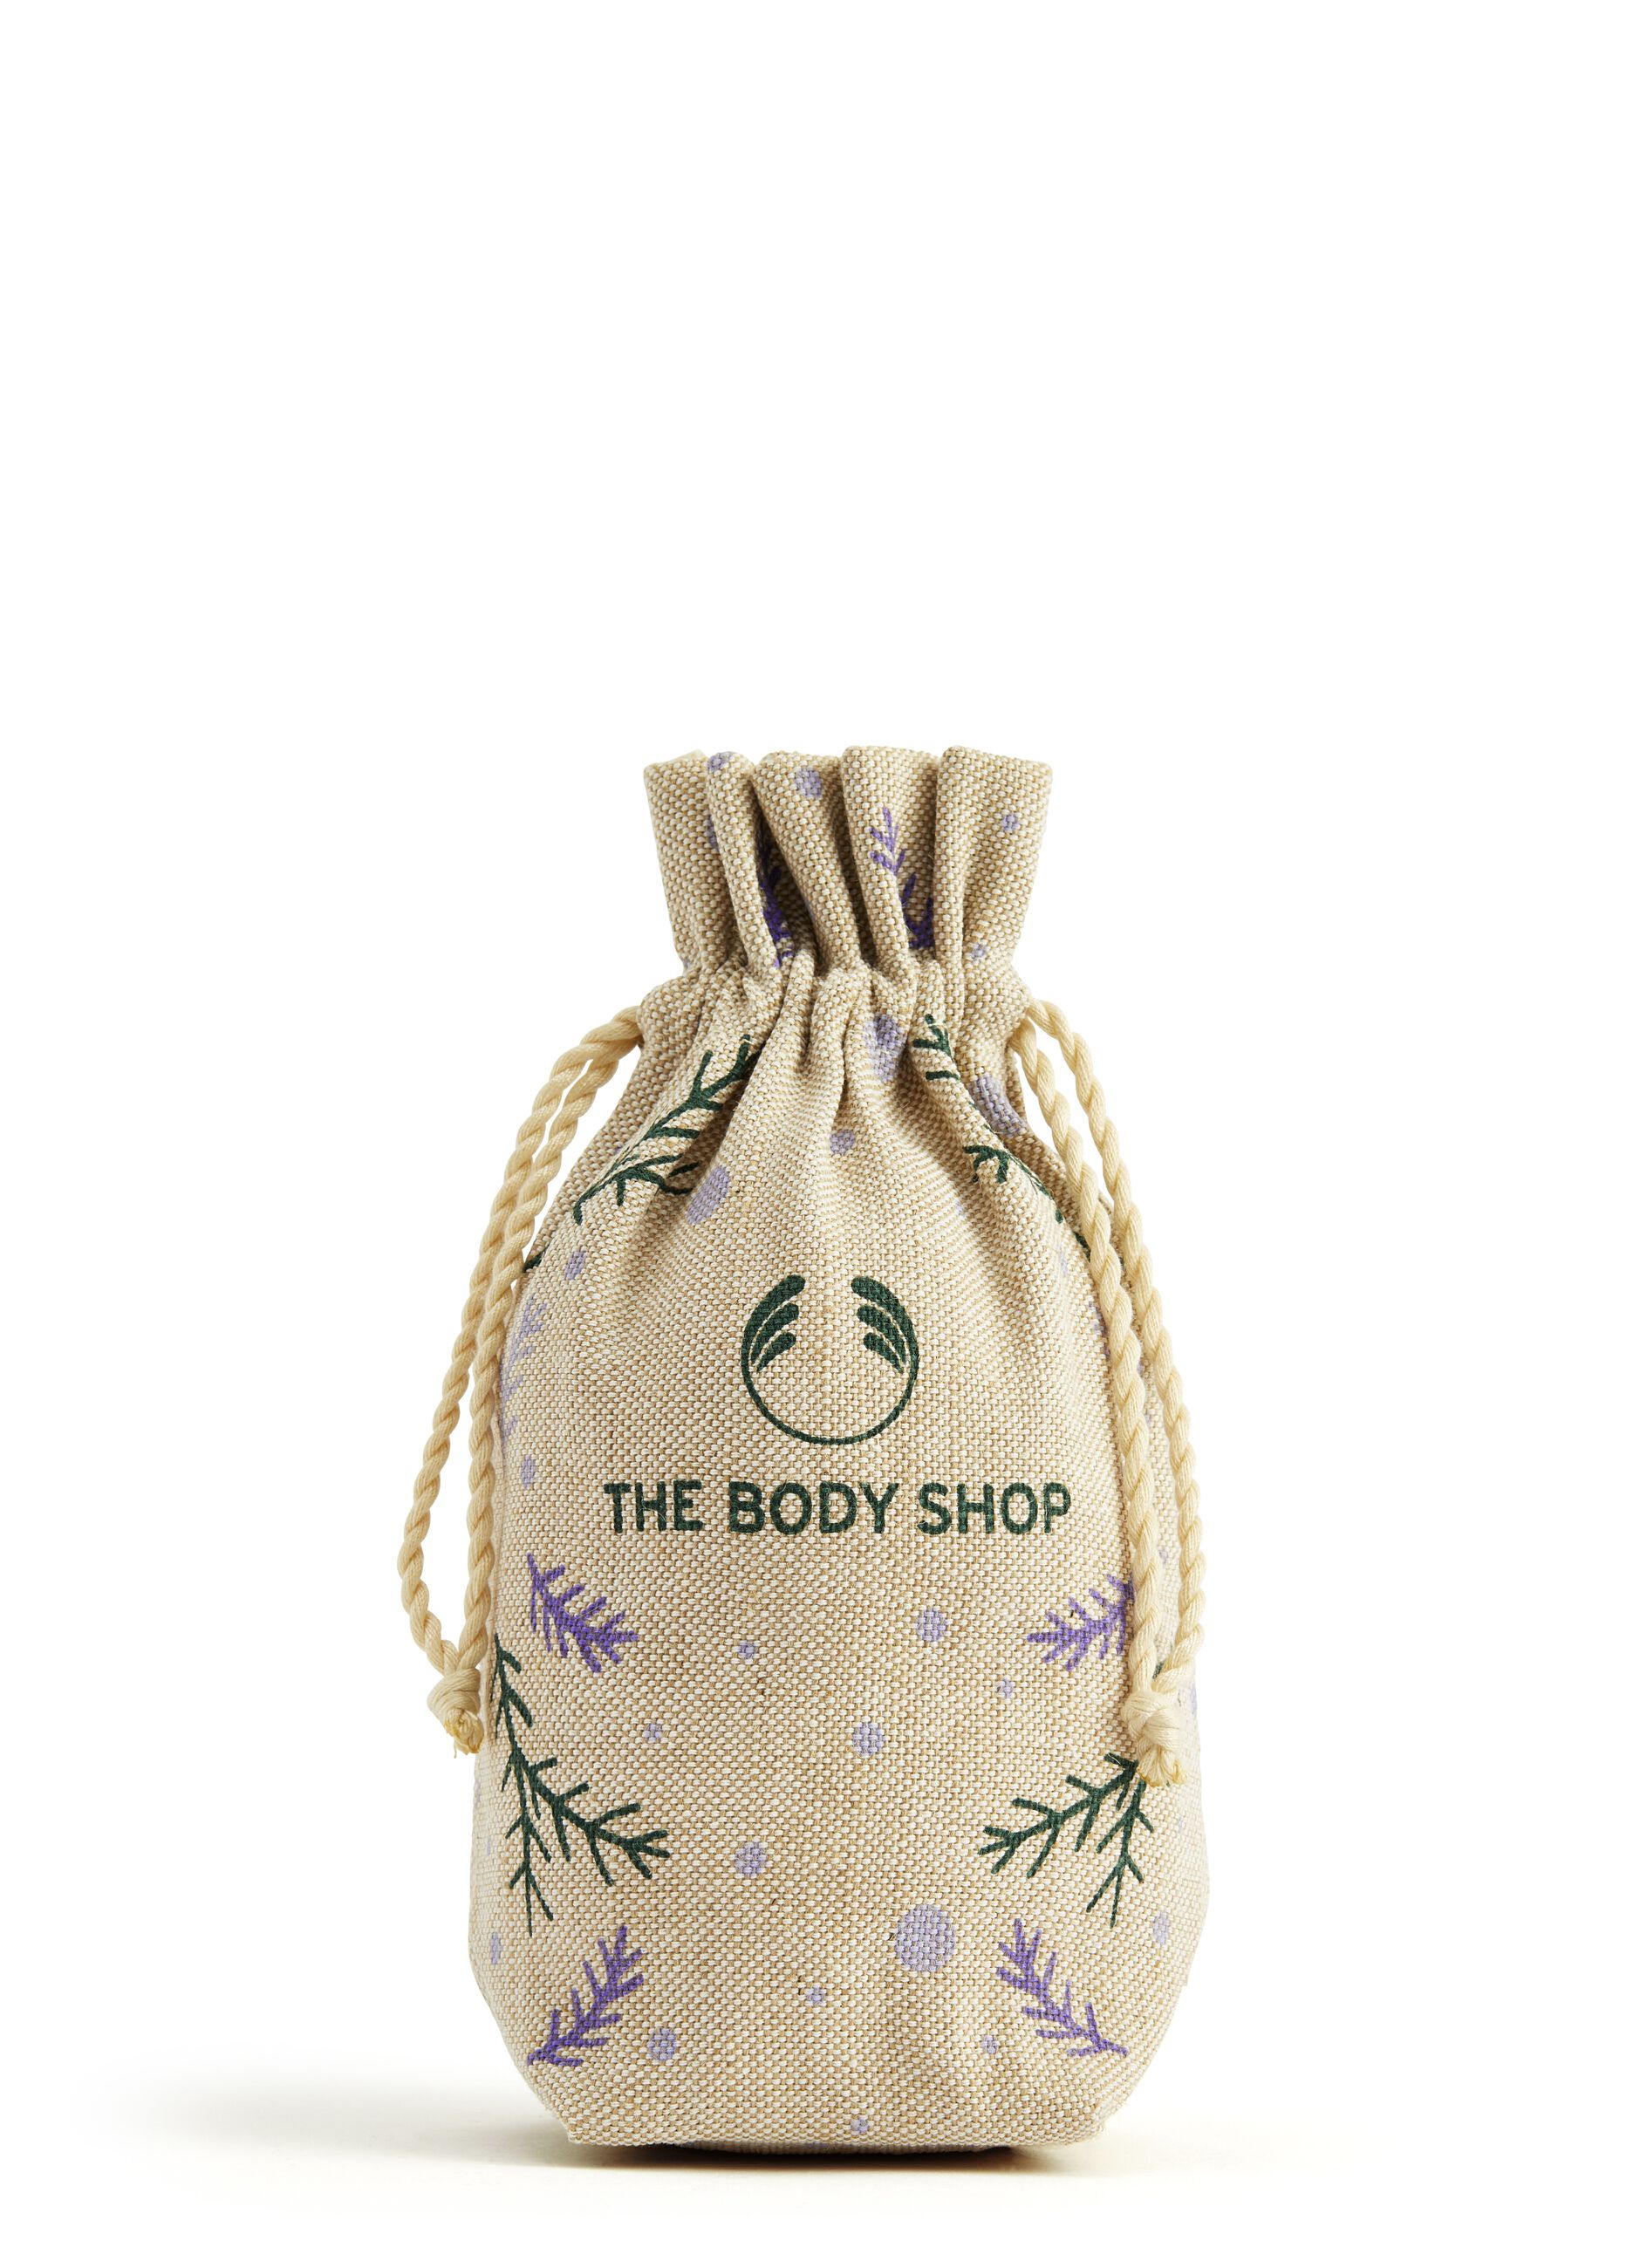 The Body Shop mini gift bag